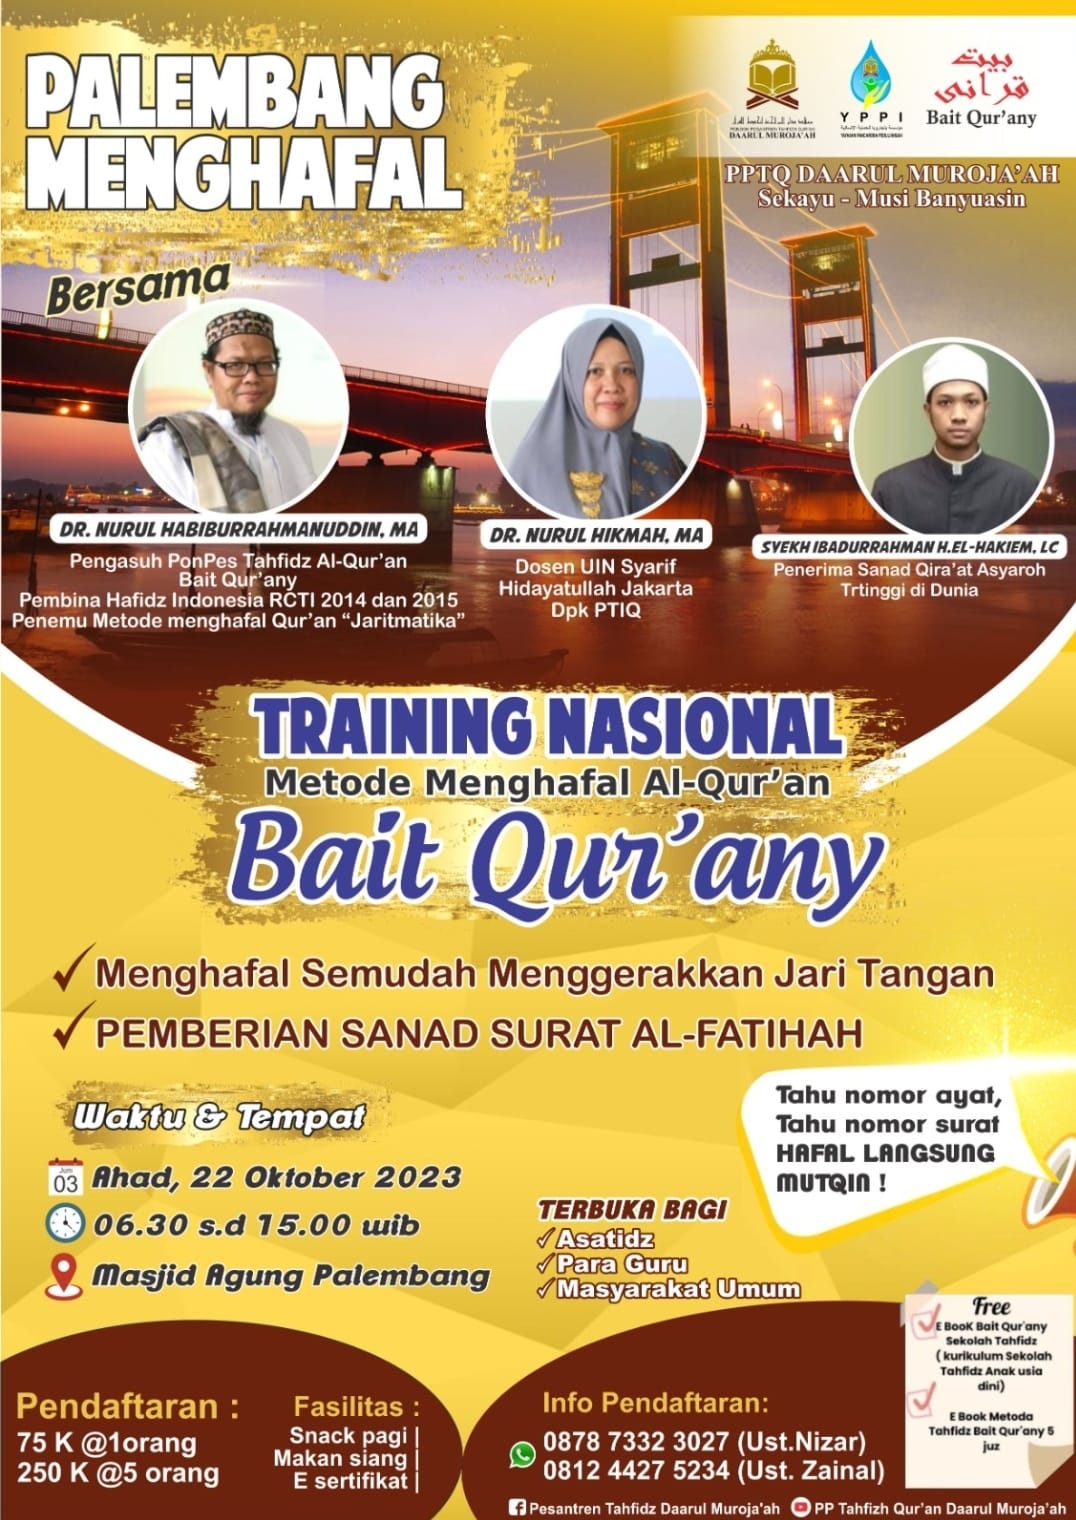 Metode Bait Qur'any Digelar di Palembang, Dihadiri Ibadurrahman Habib El hakiem